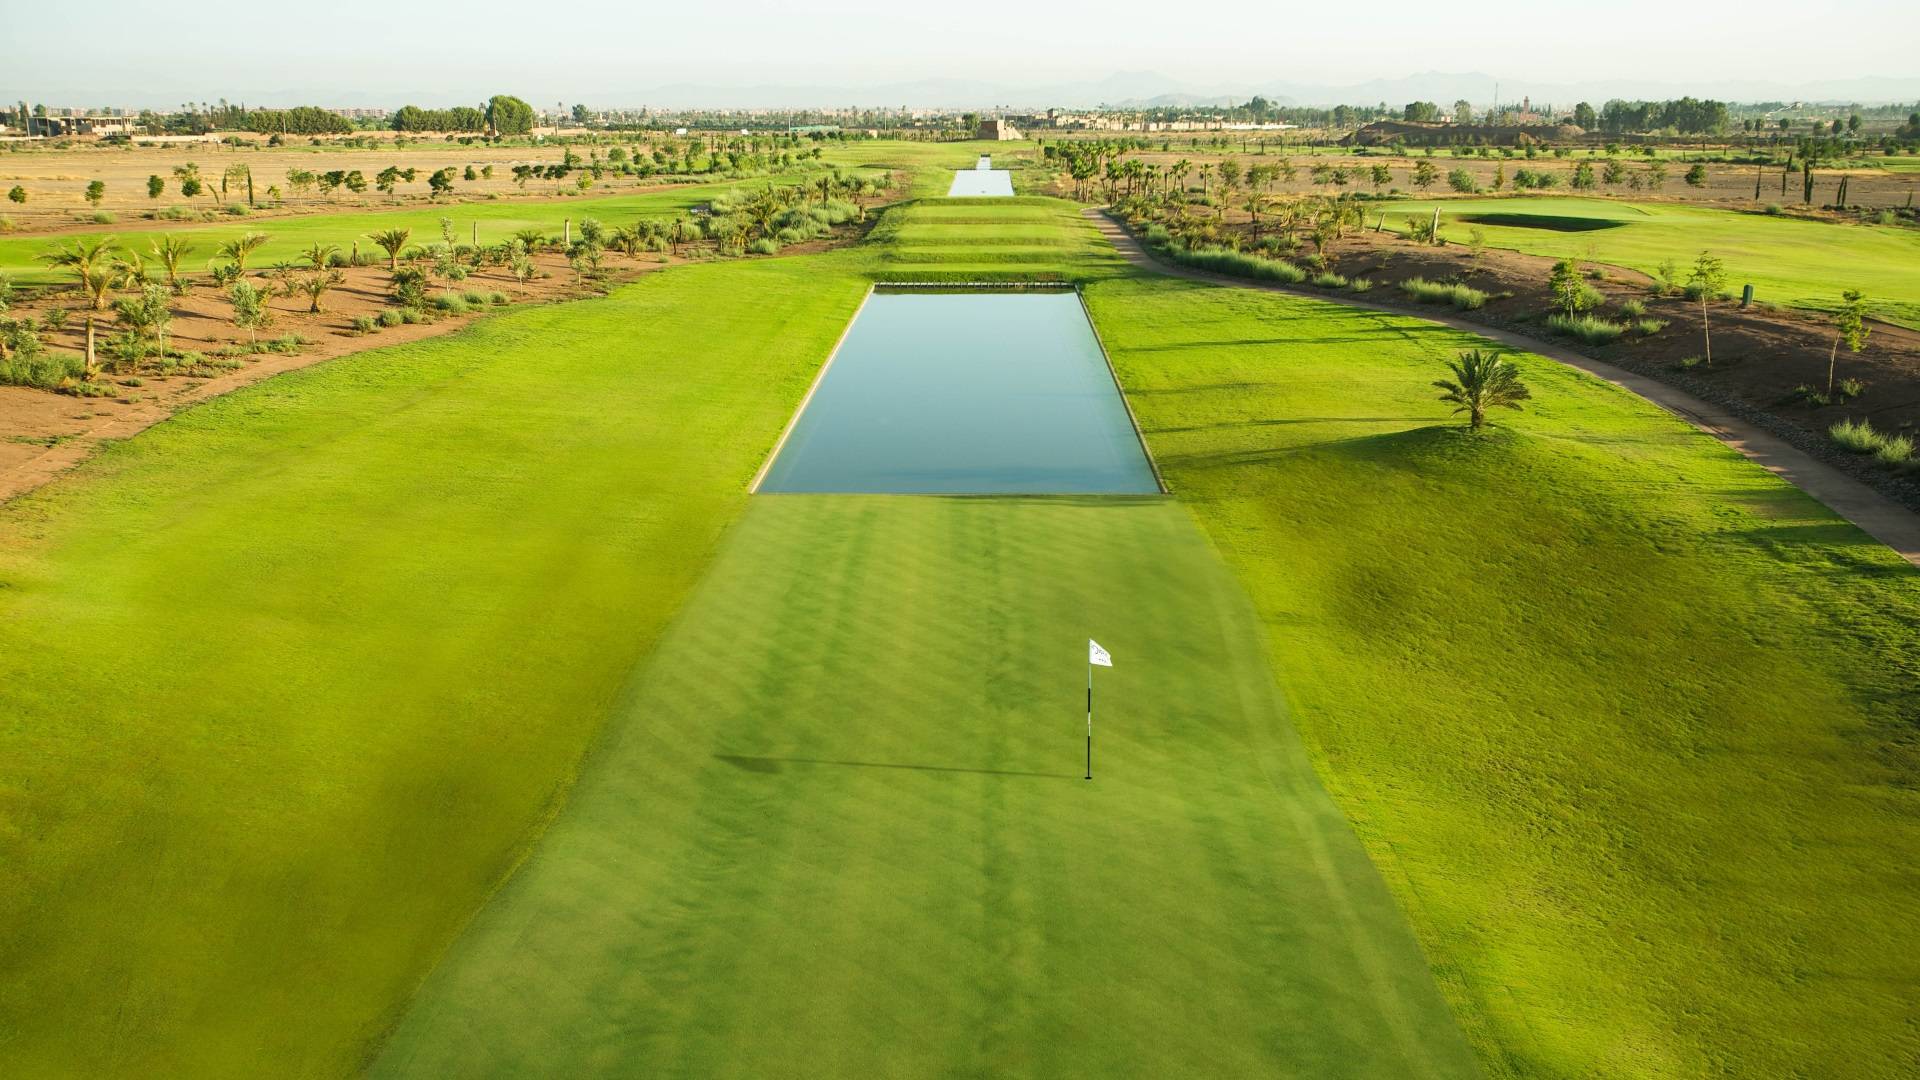 The Royal Marrakech Golf Club